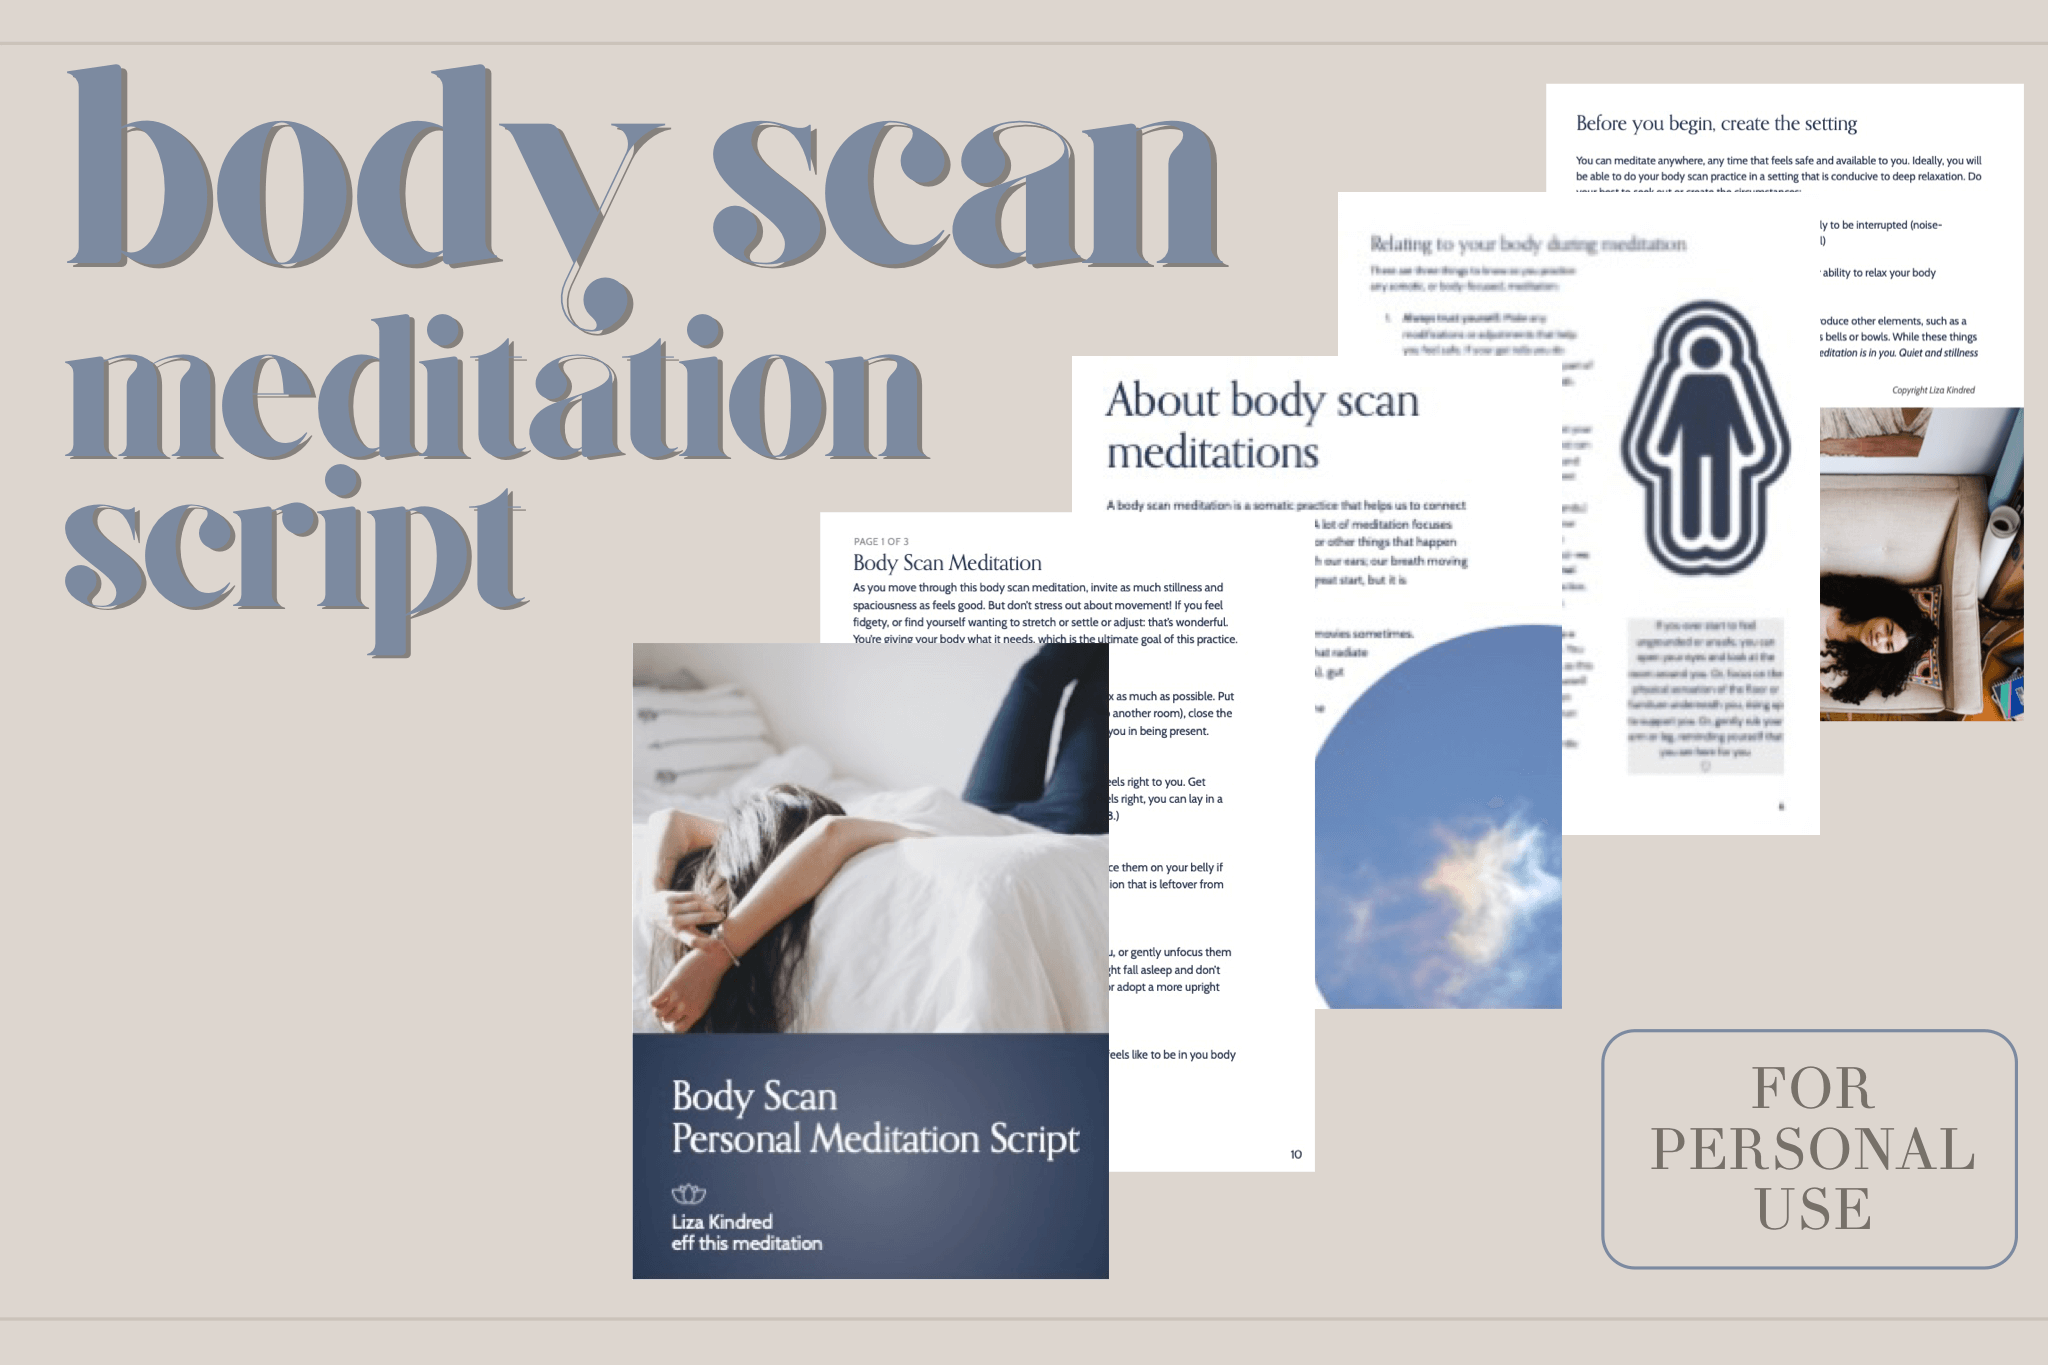 Body Scan Script — this meditation